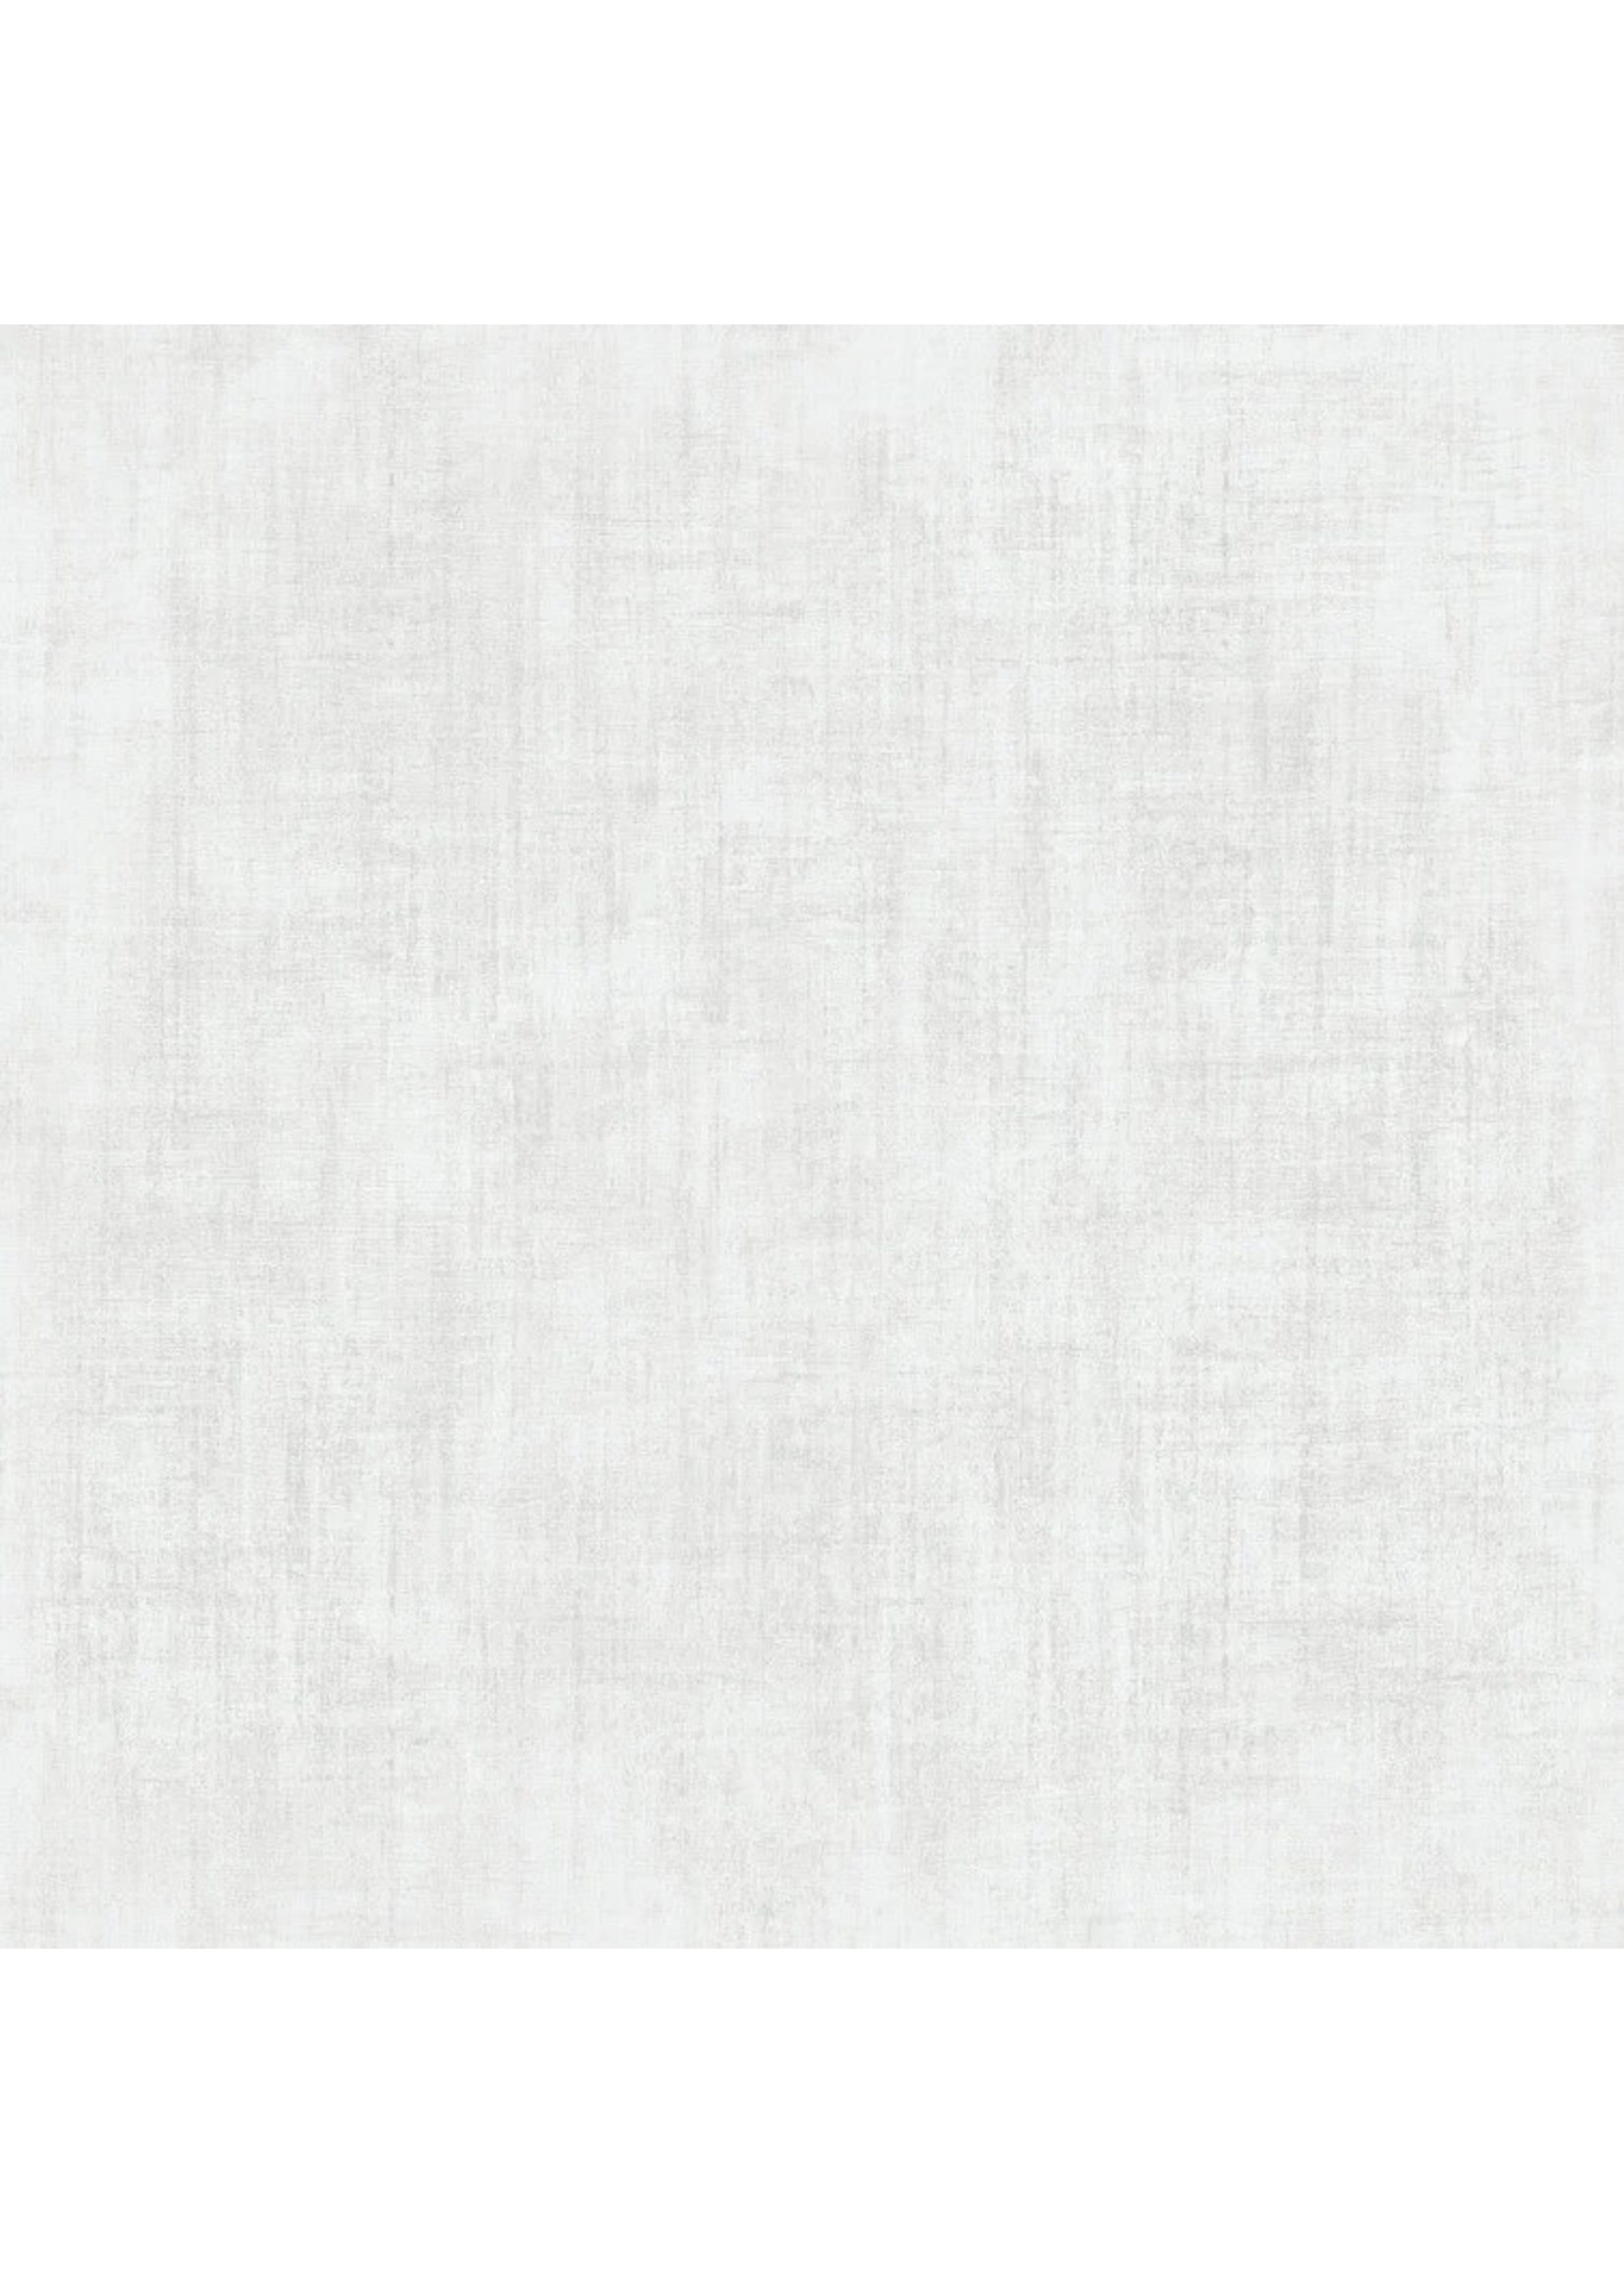 *33'L x 21"W Italian Textures 2 Rough Texture Wallpaper - Off White - Final Sale